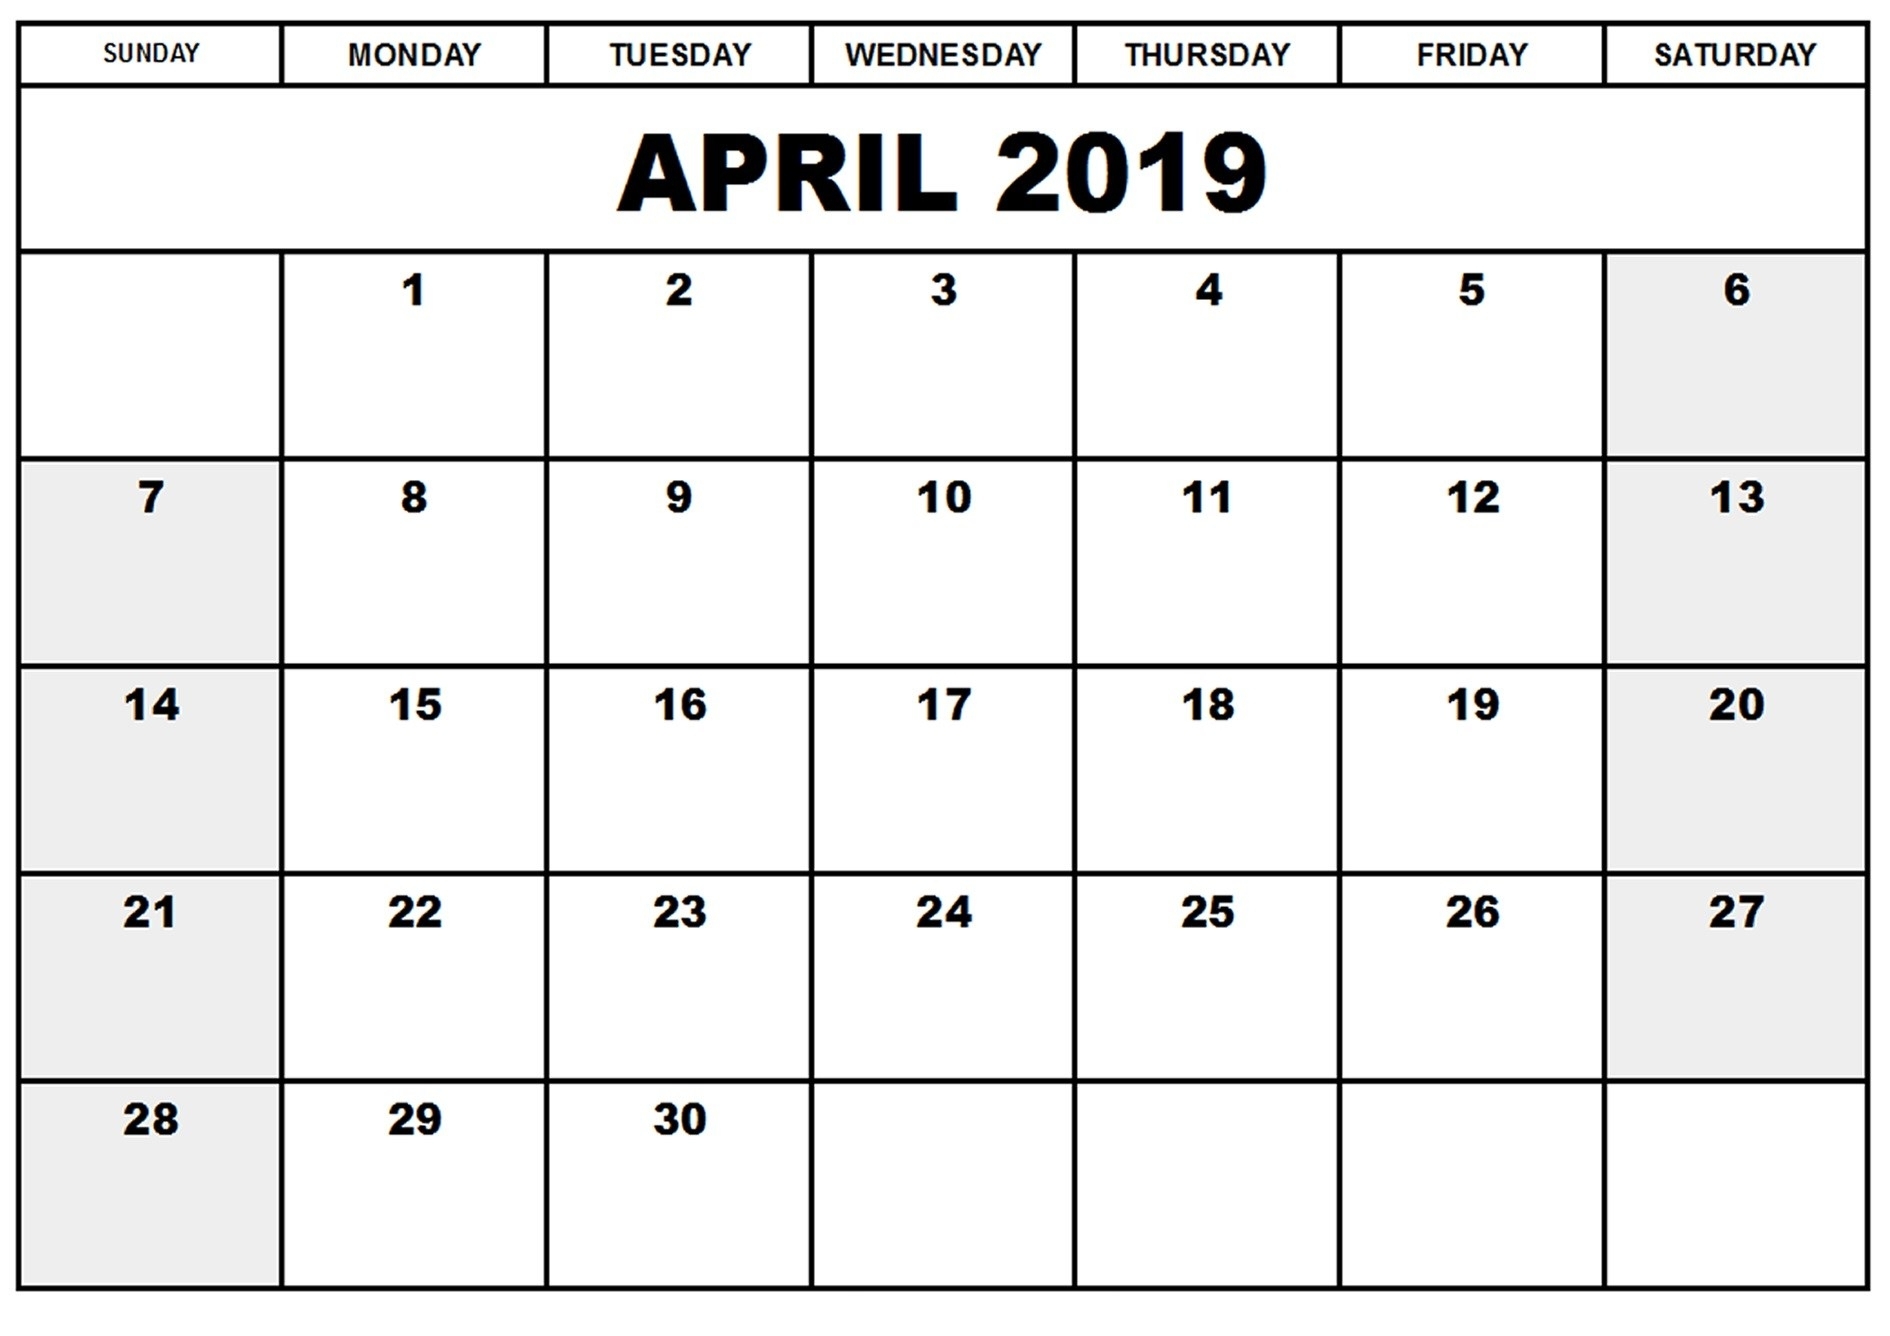 April 2019 Printable Calendar Templates - Free Blank, Holidays in Free Blank Printable Calendar Template